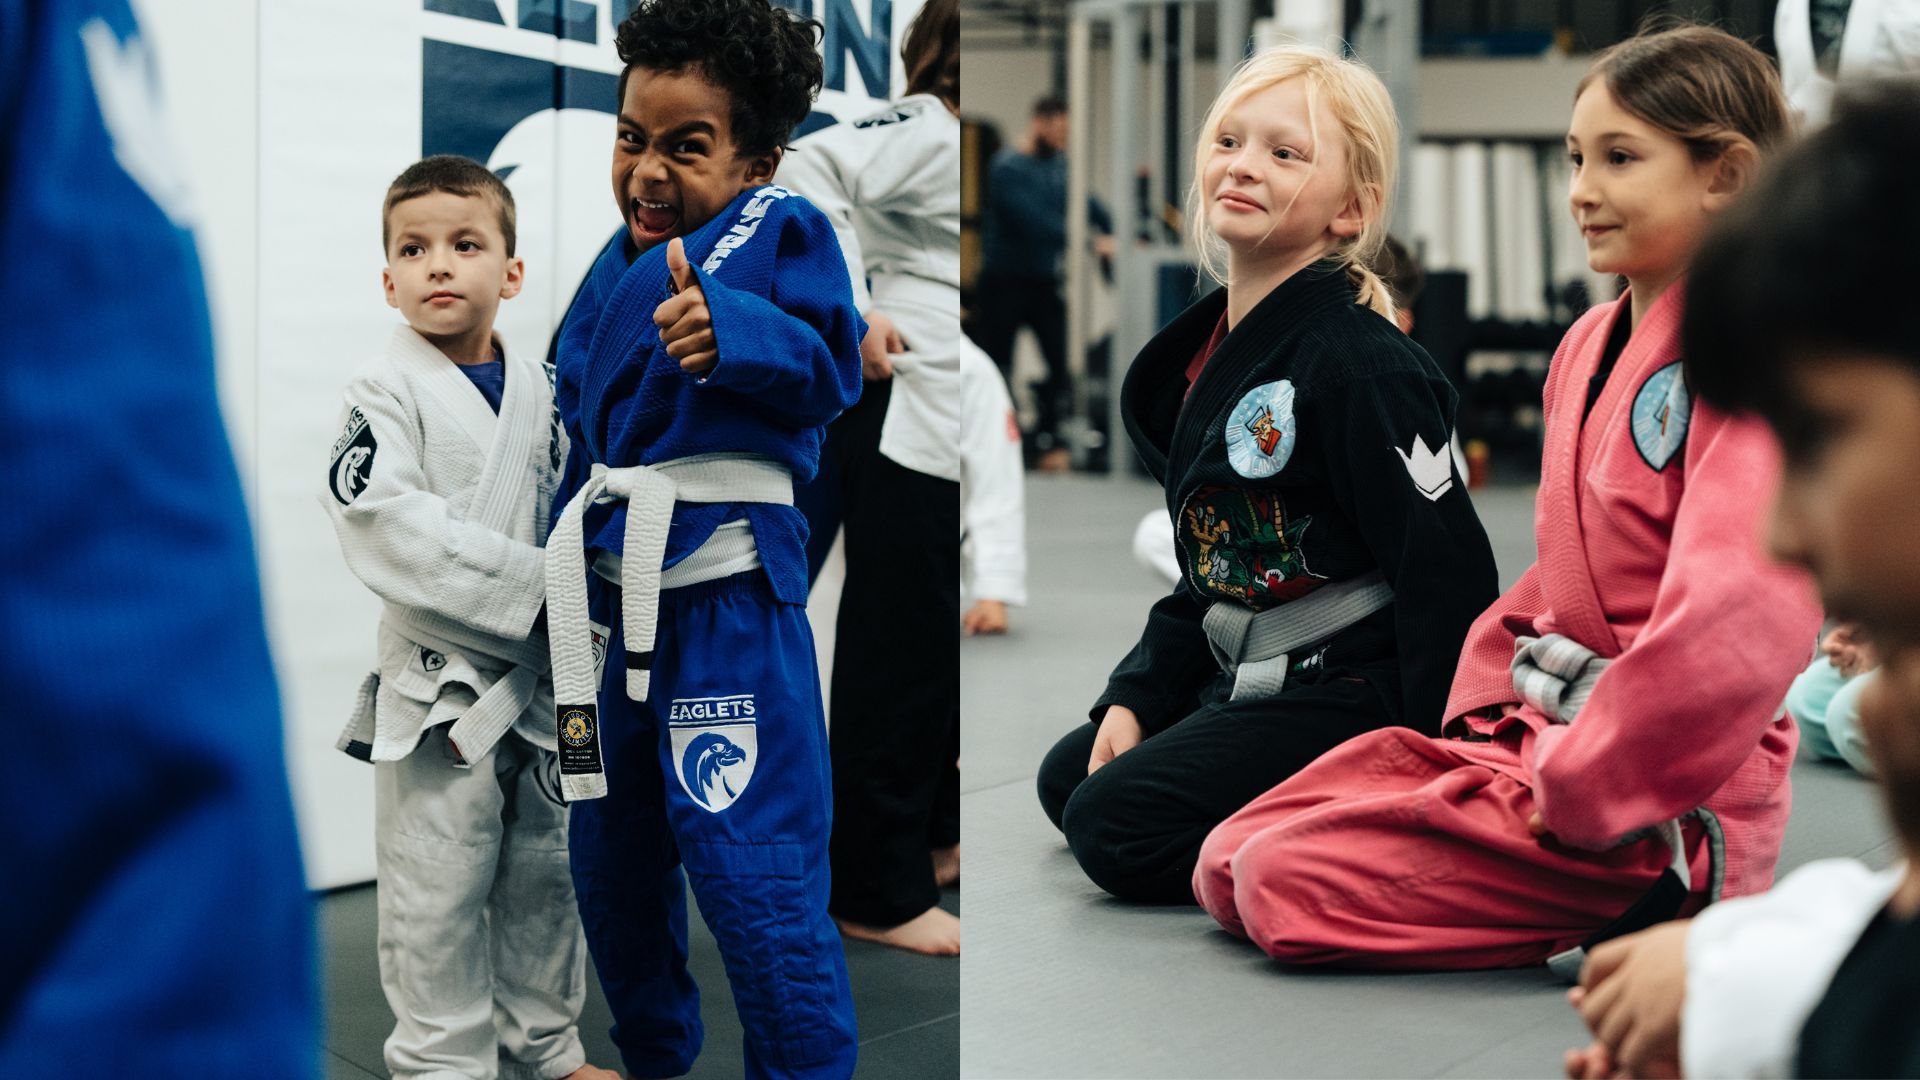 BacktoSchool Jiu Jitsu Course for Kids